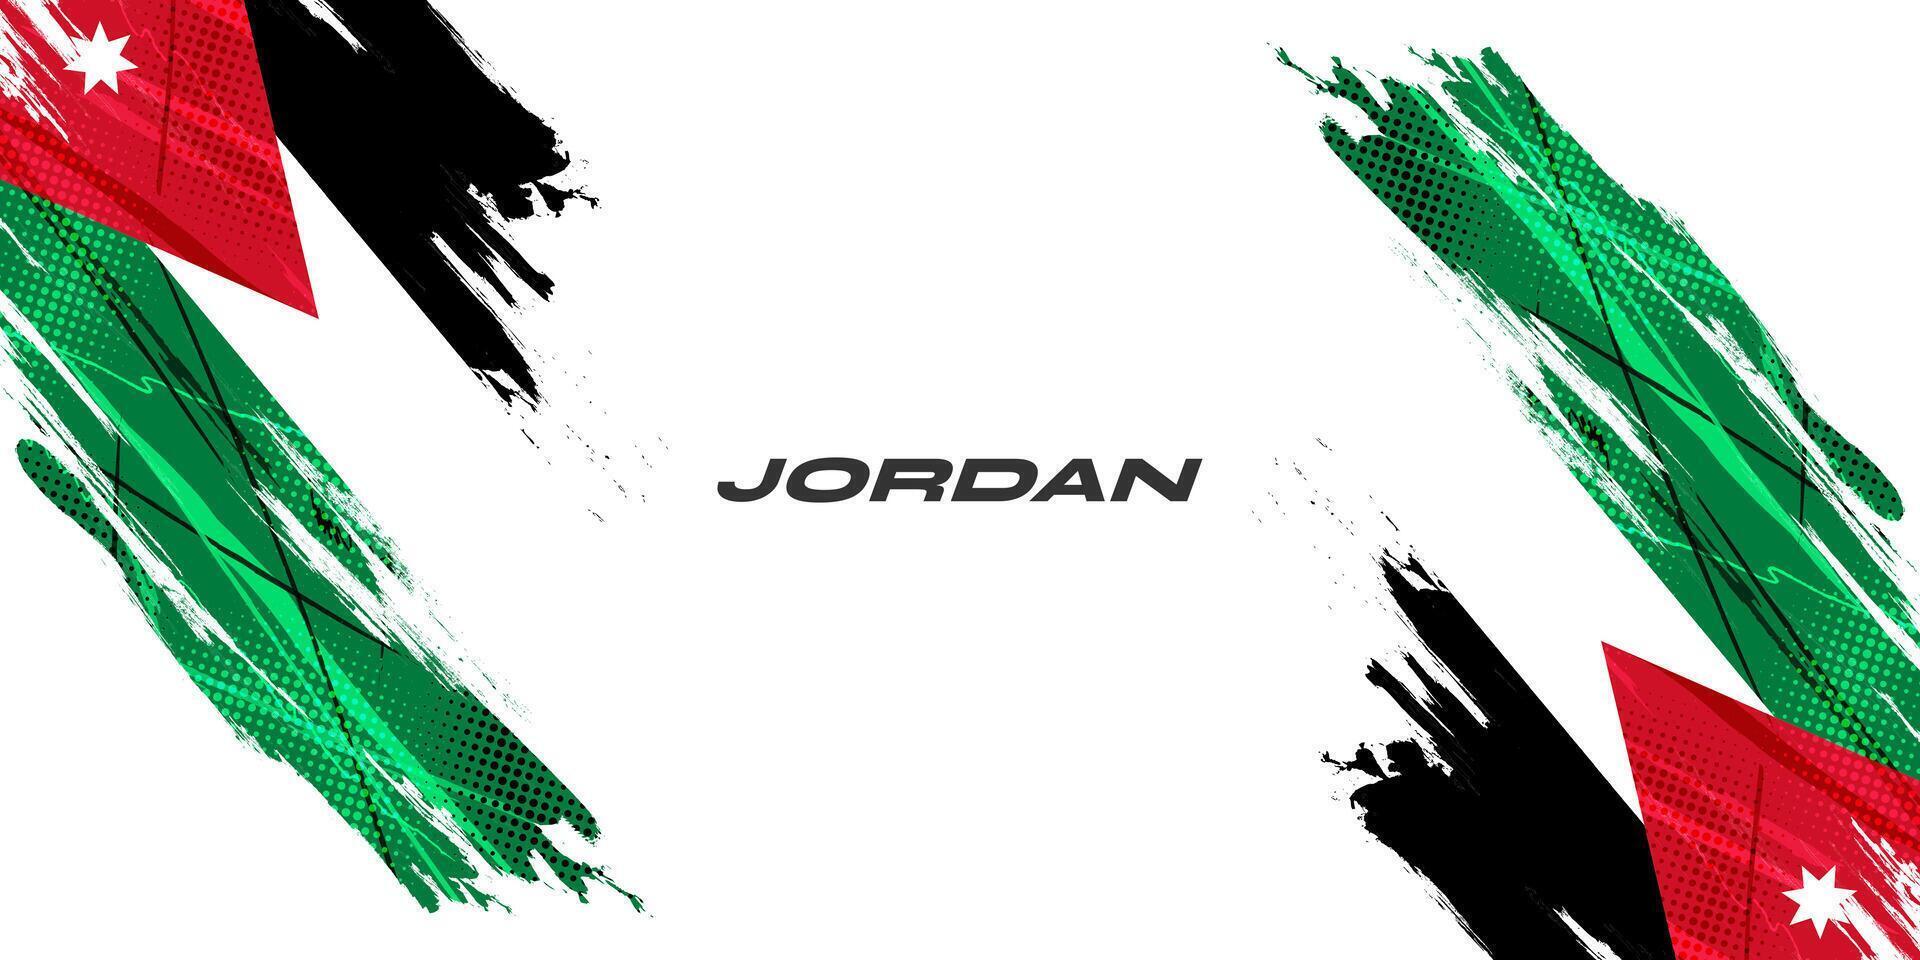 Jordan Flagge im Bürste Farbe Stil mit Halbton Wirkung. National Flagge von Jordan mit Grunge Bürste Konzept vektor